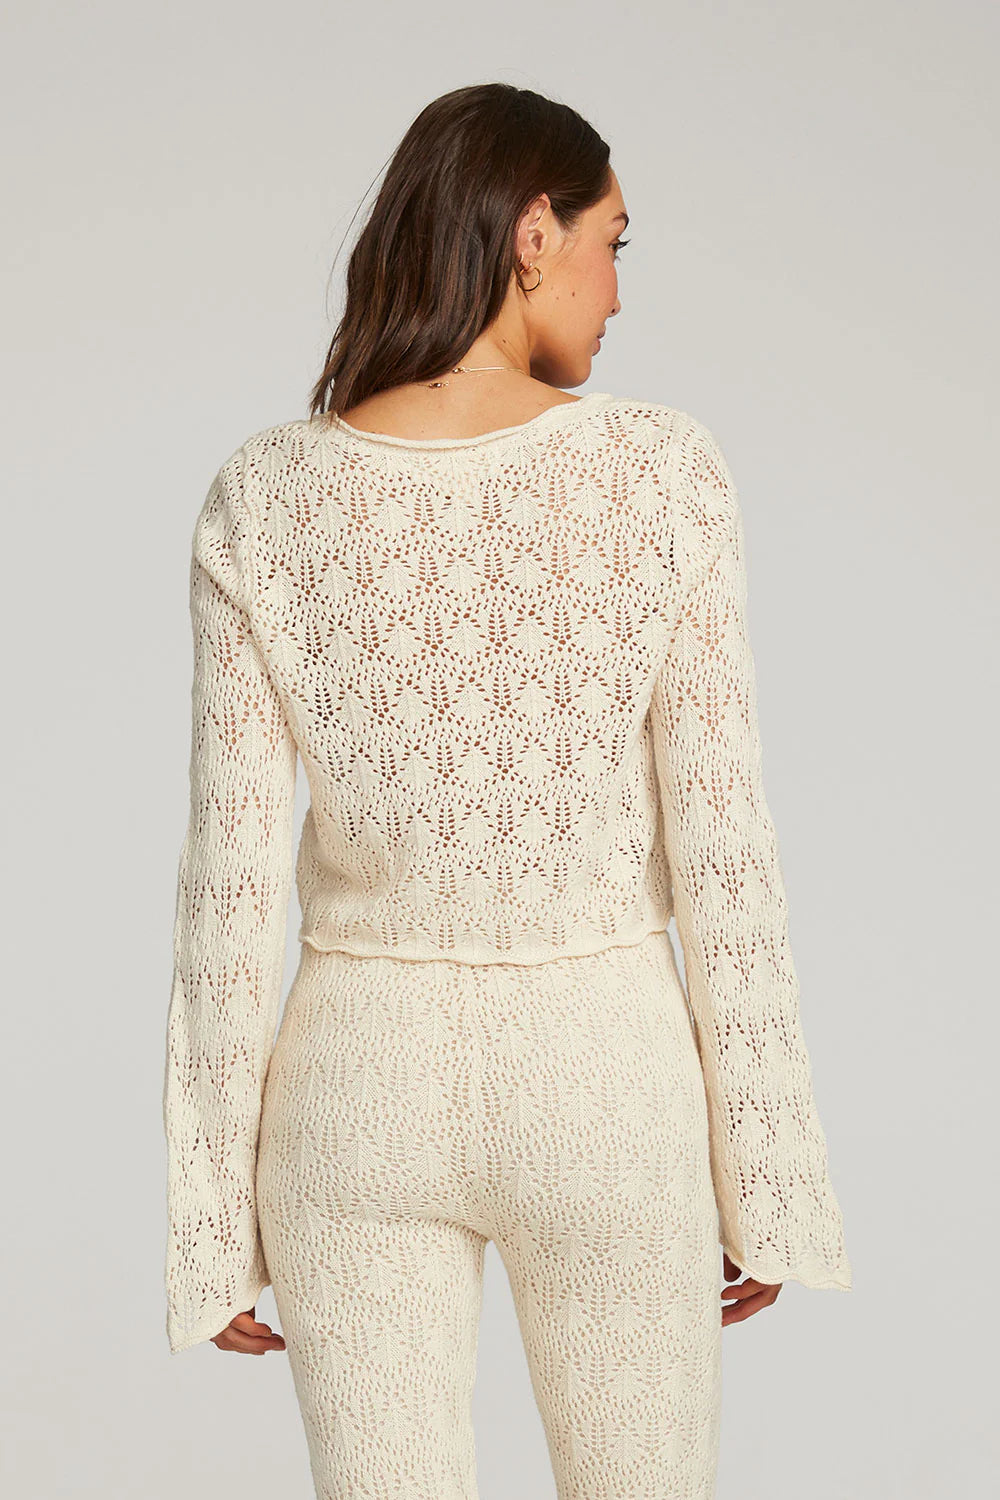 Ovi Crochet Sweater